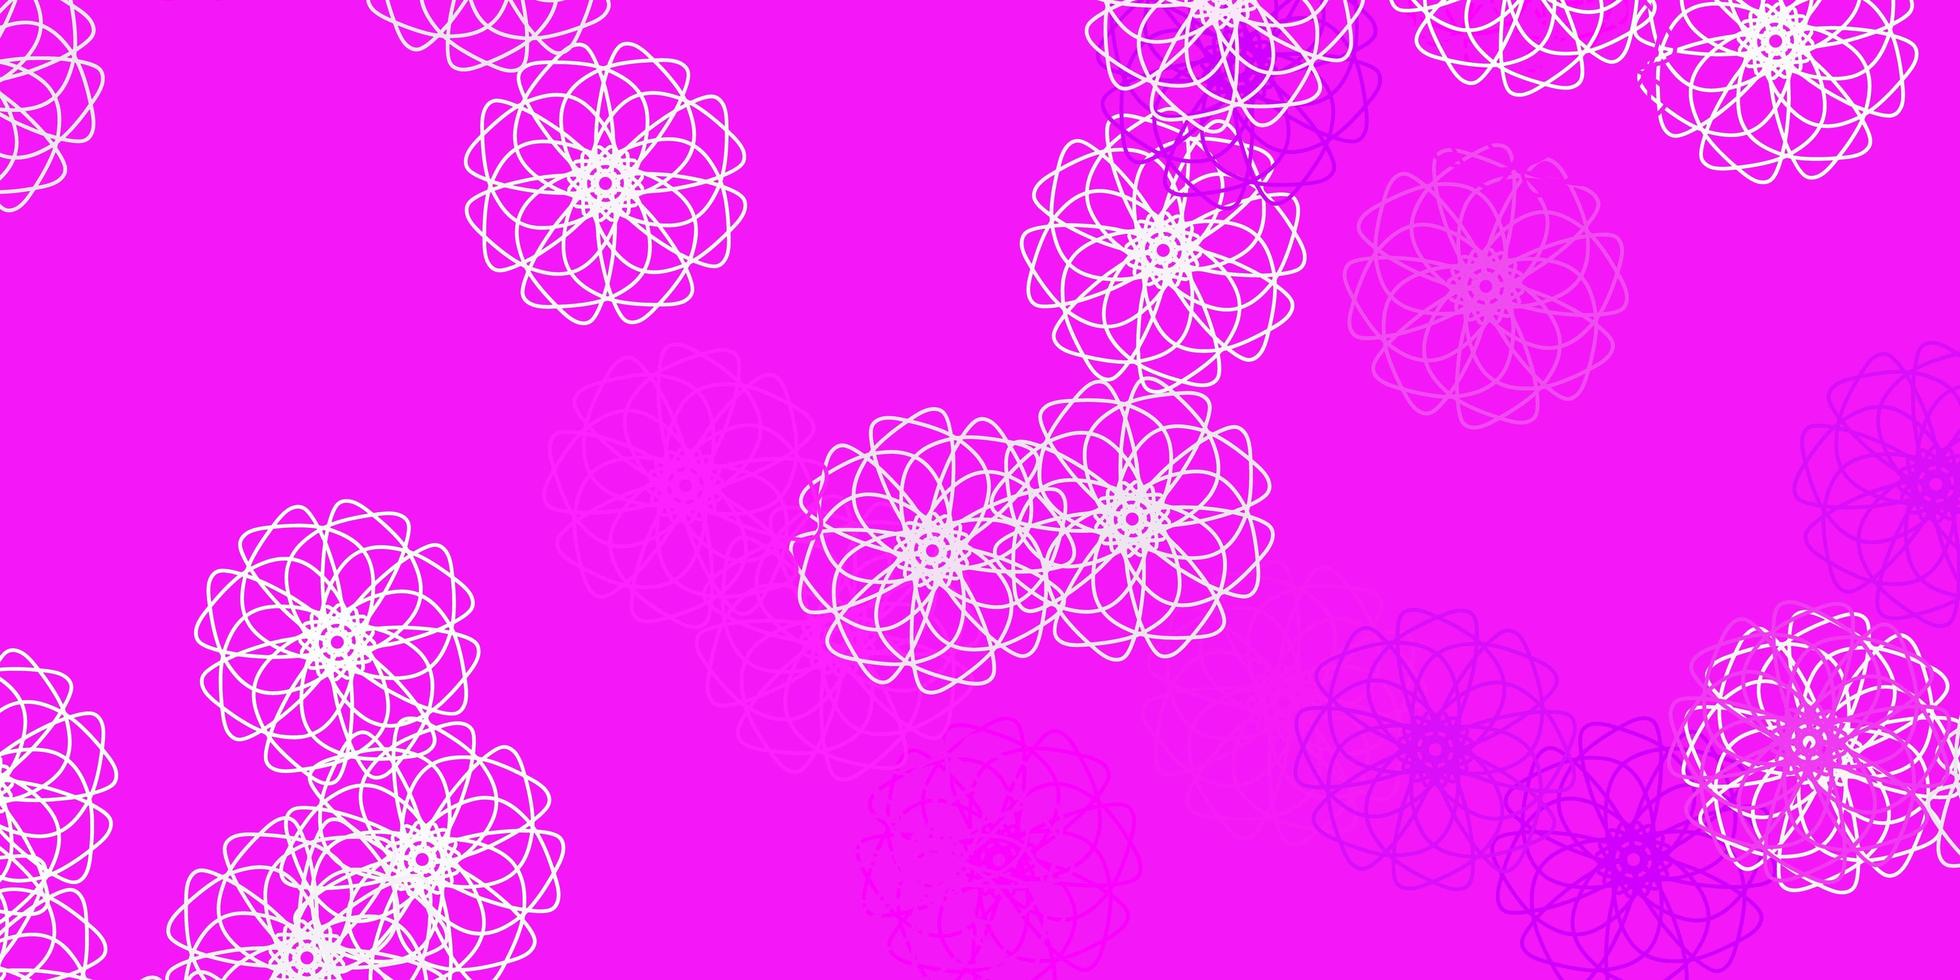 Fondo de doodle de vector rosa claro con flores.